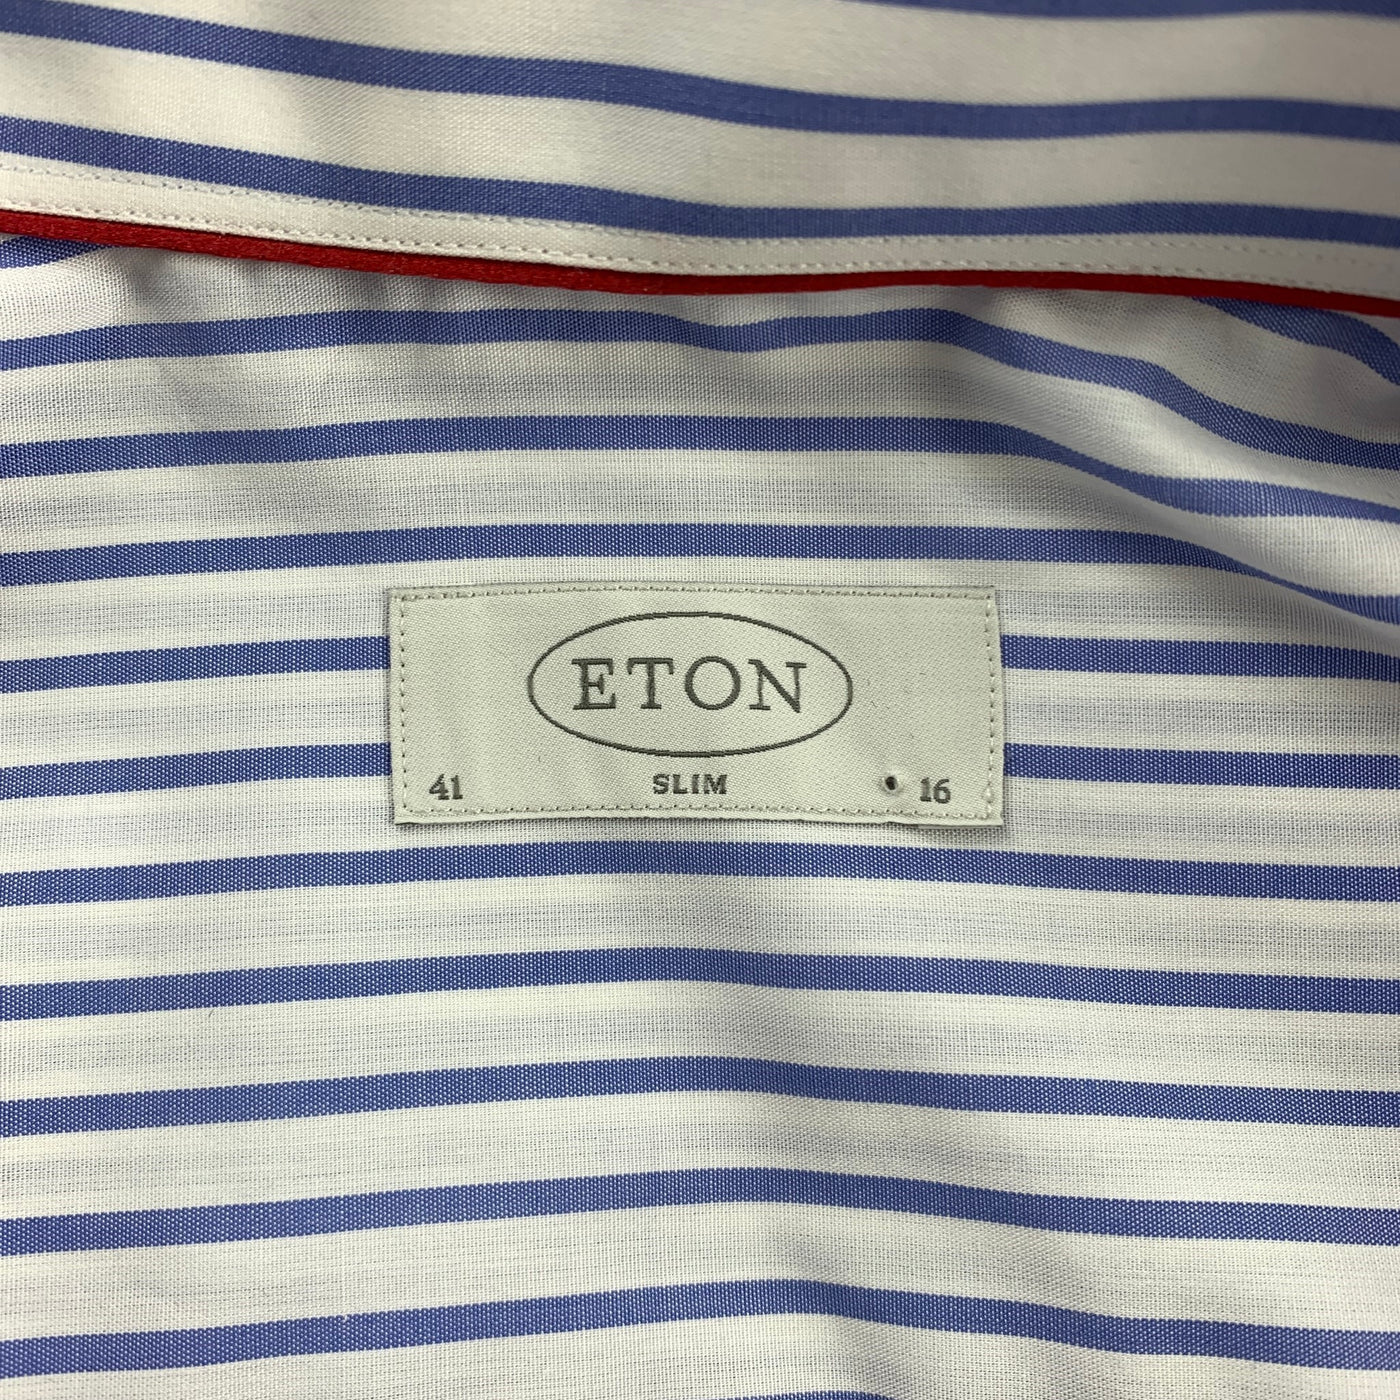 ETON Size M White & Blue Stripe Cotton Button Up Long Sleeve Shirt